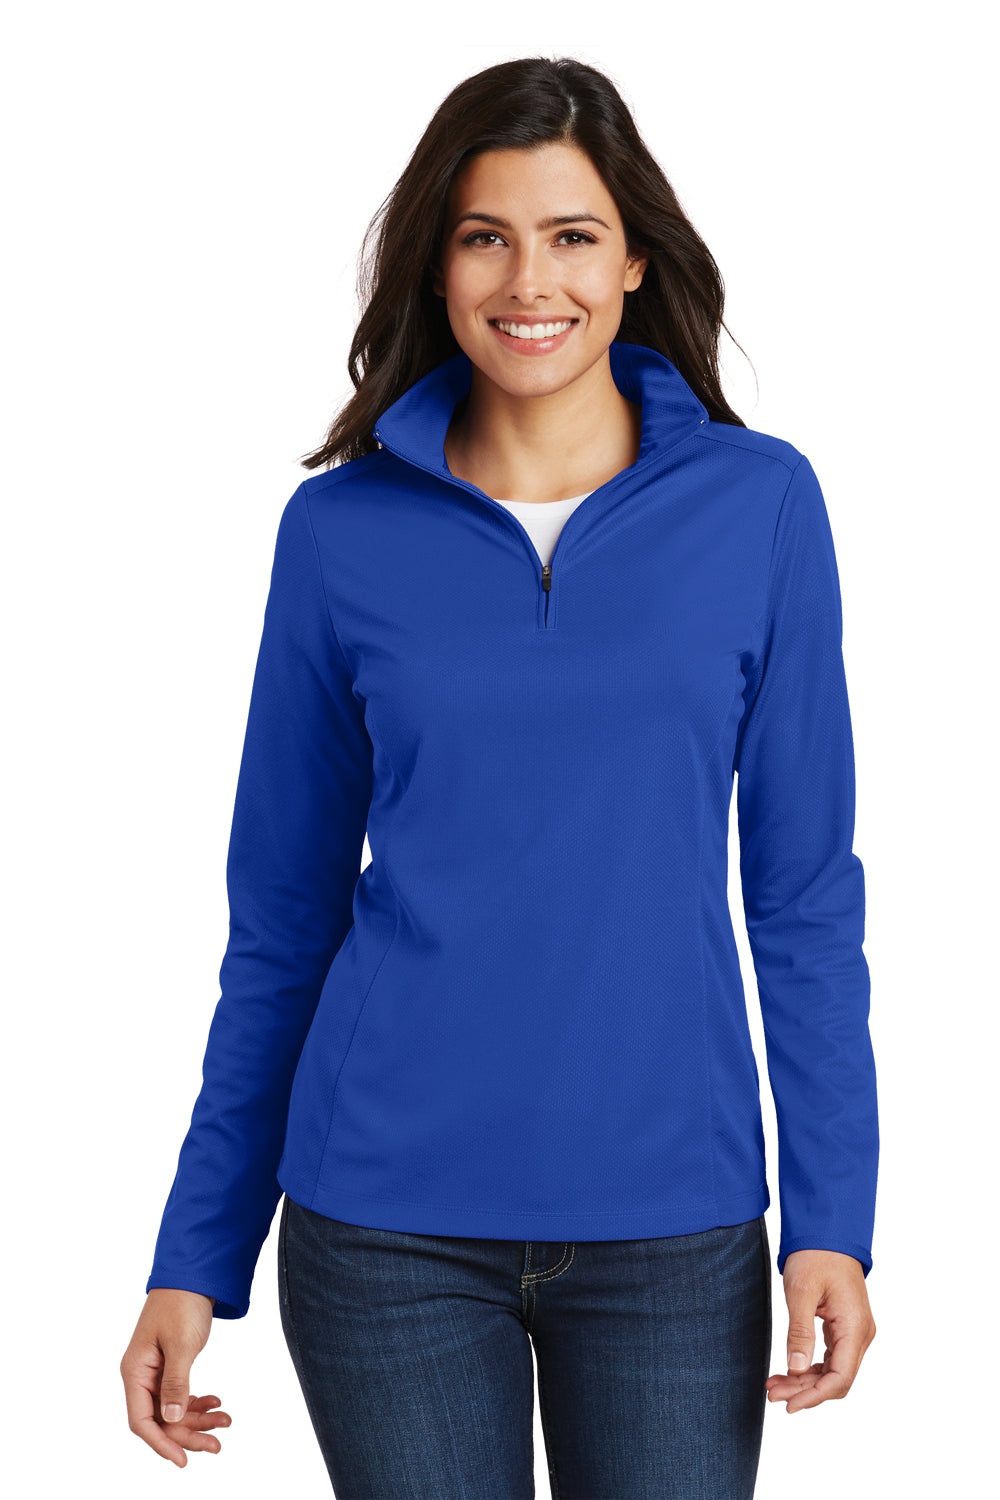 Port Authority L806 Womens Moisture Wicking 1/4 Zip Sweatshirt Royal Blue Front